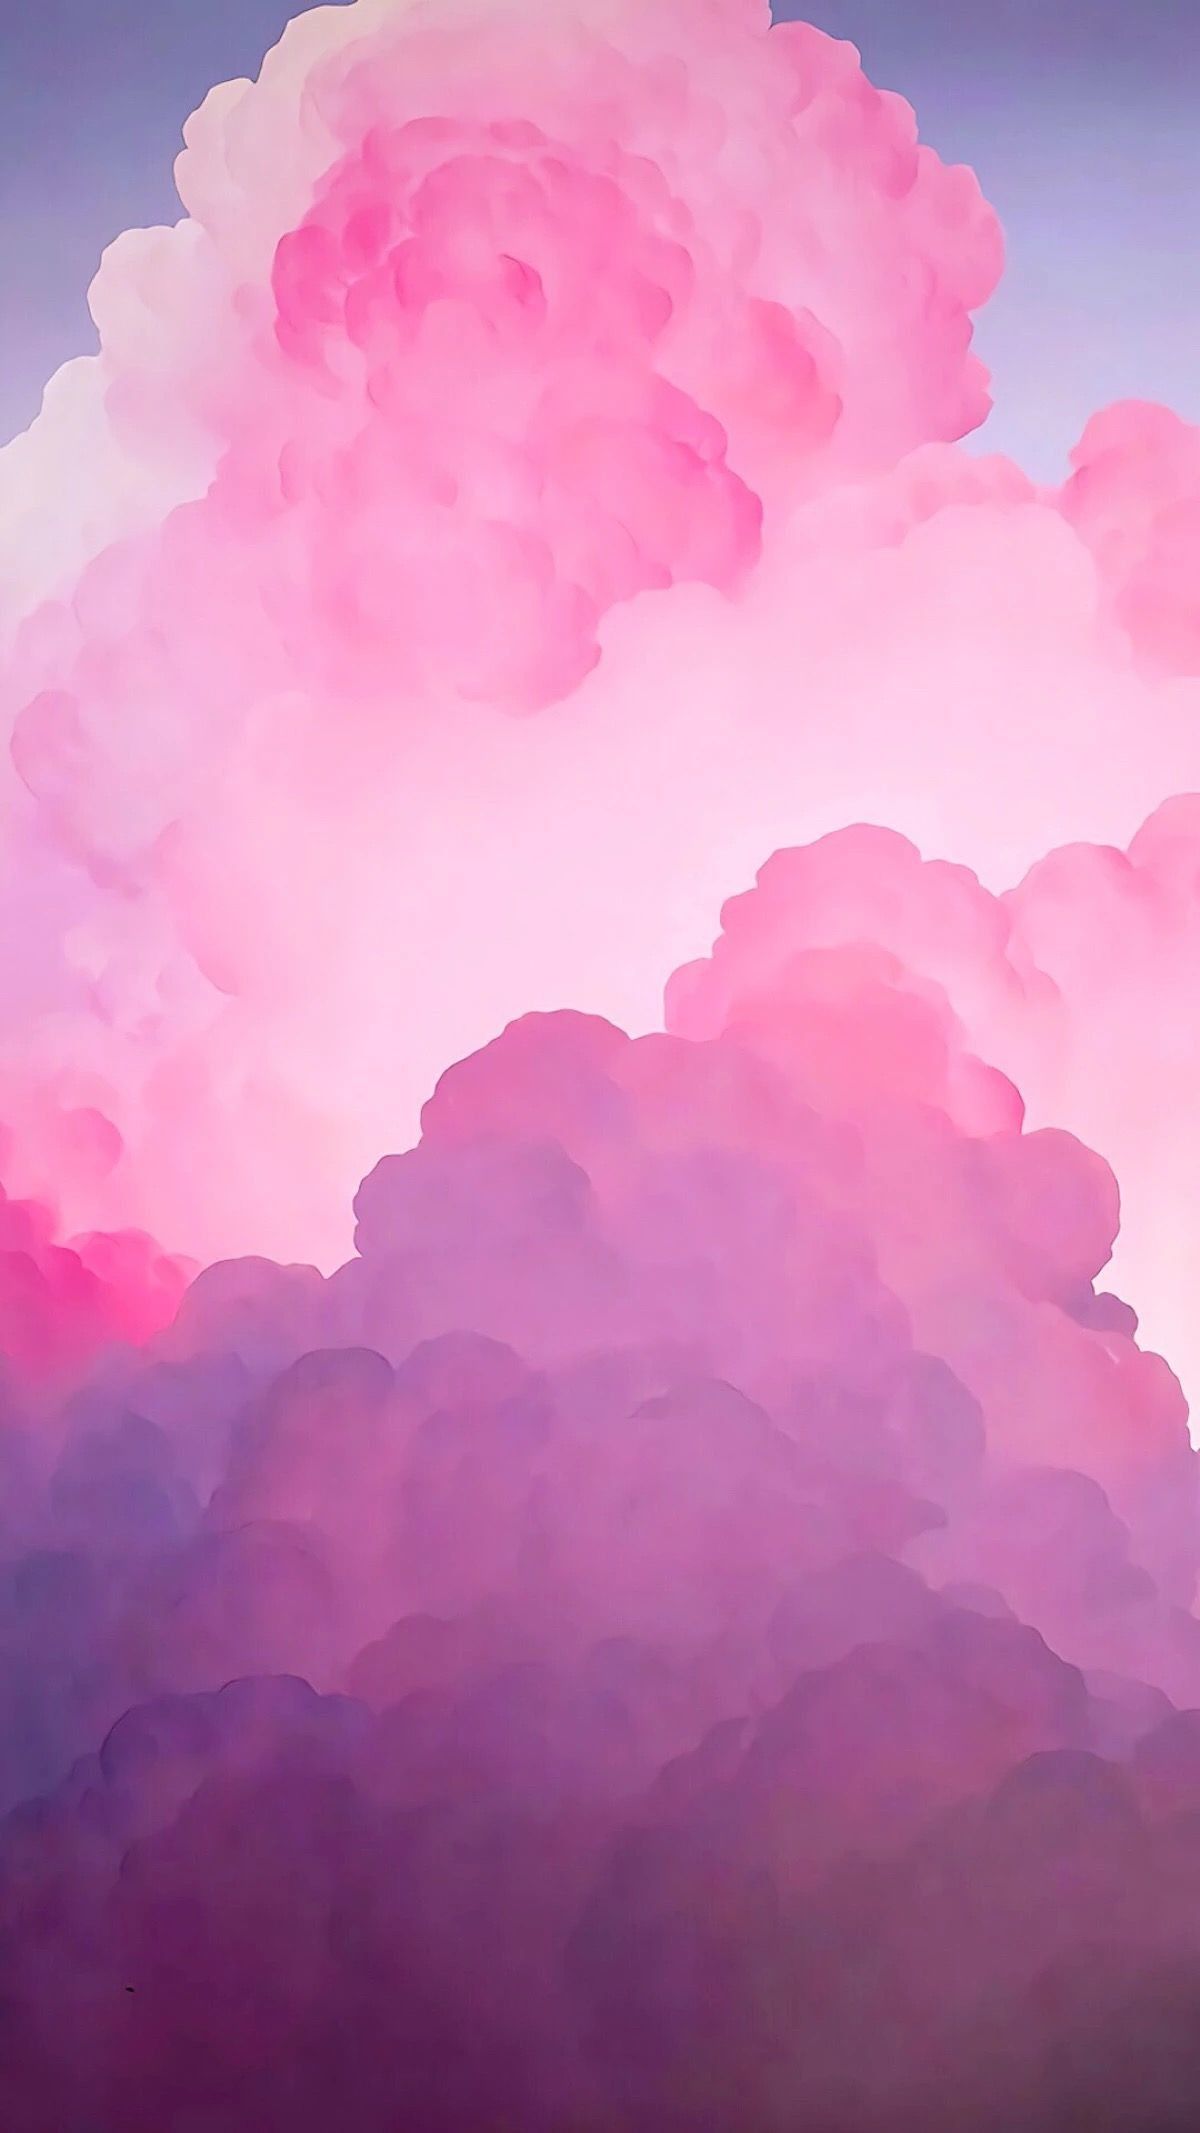 1200x Colorful Clouds, Pink Clouds .teahub.io